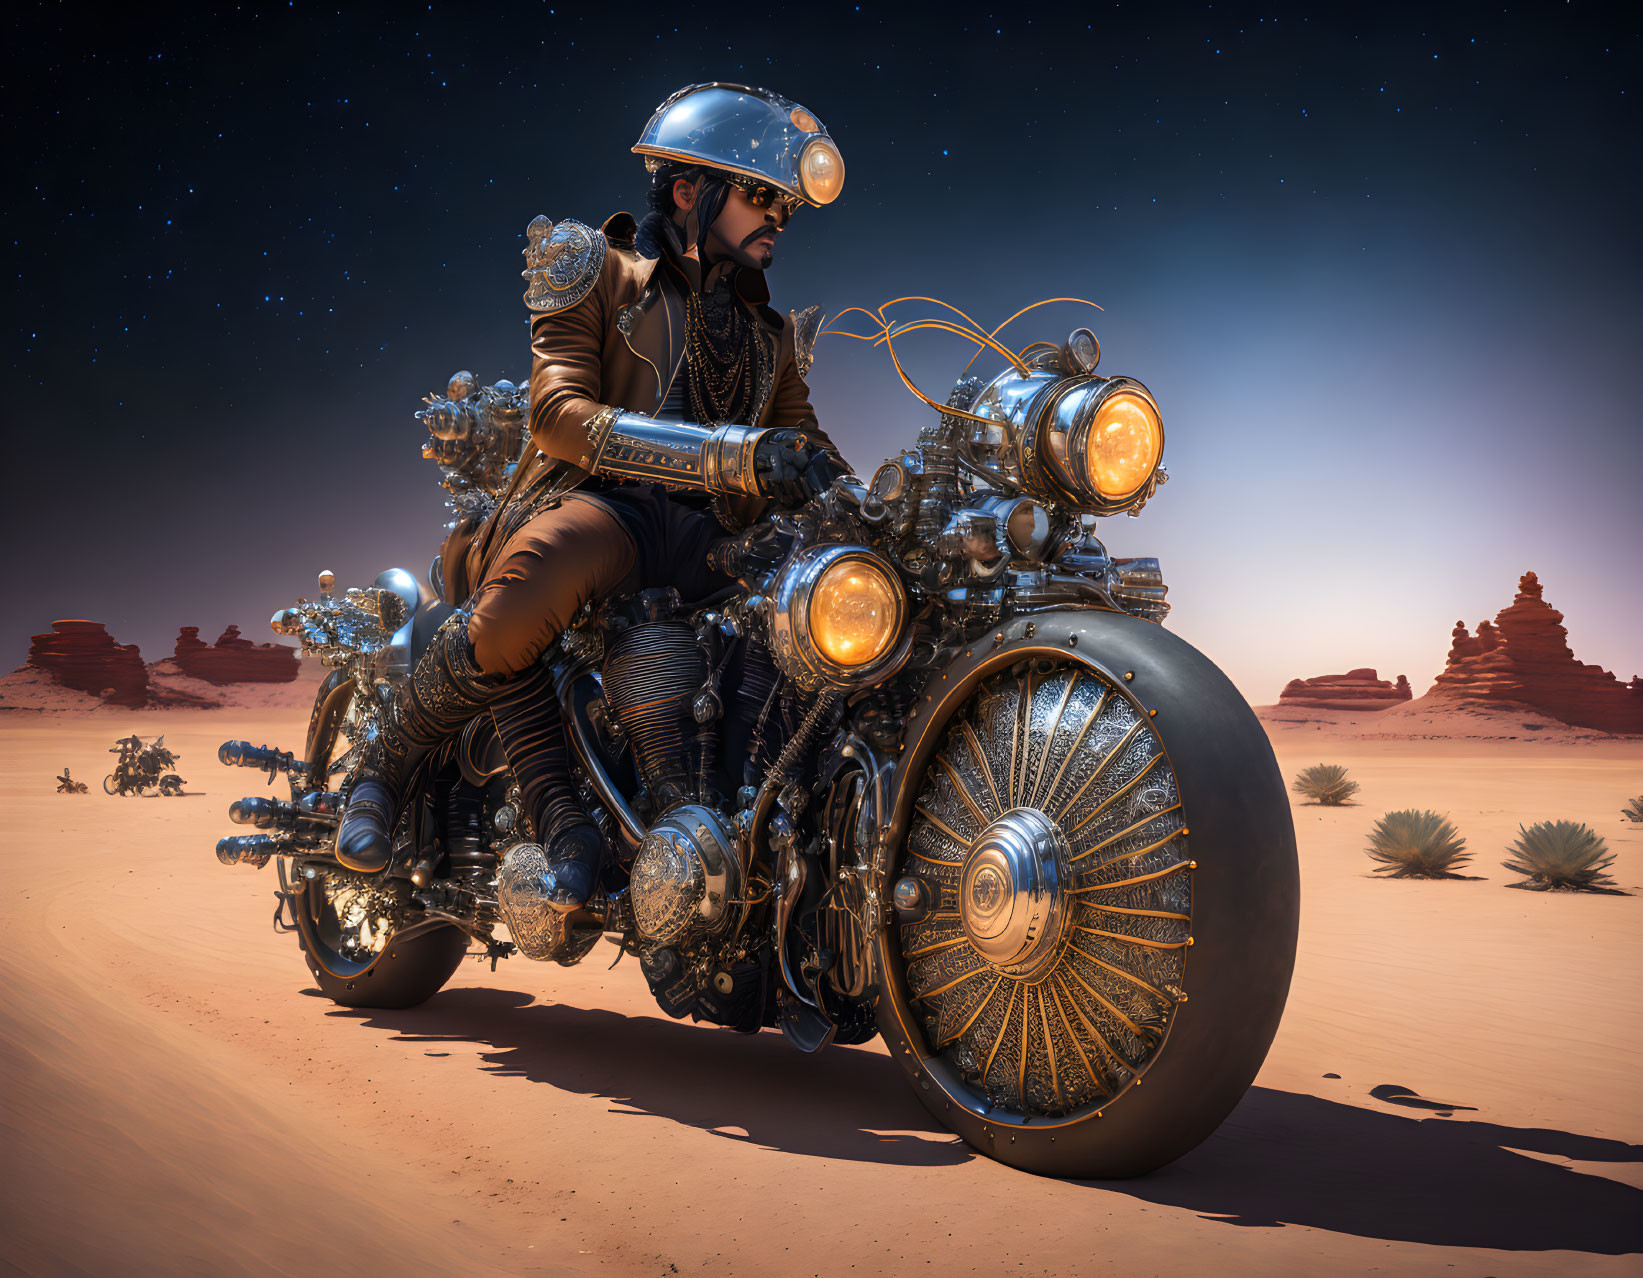 Steampunk-style motorcycle rider in desert landscape